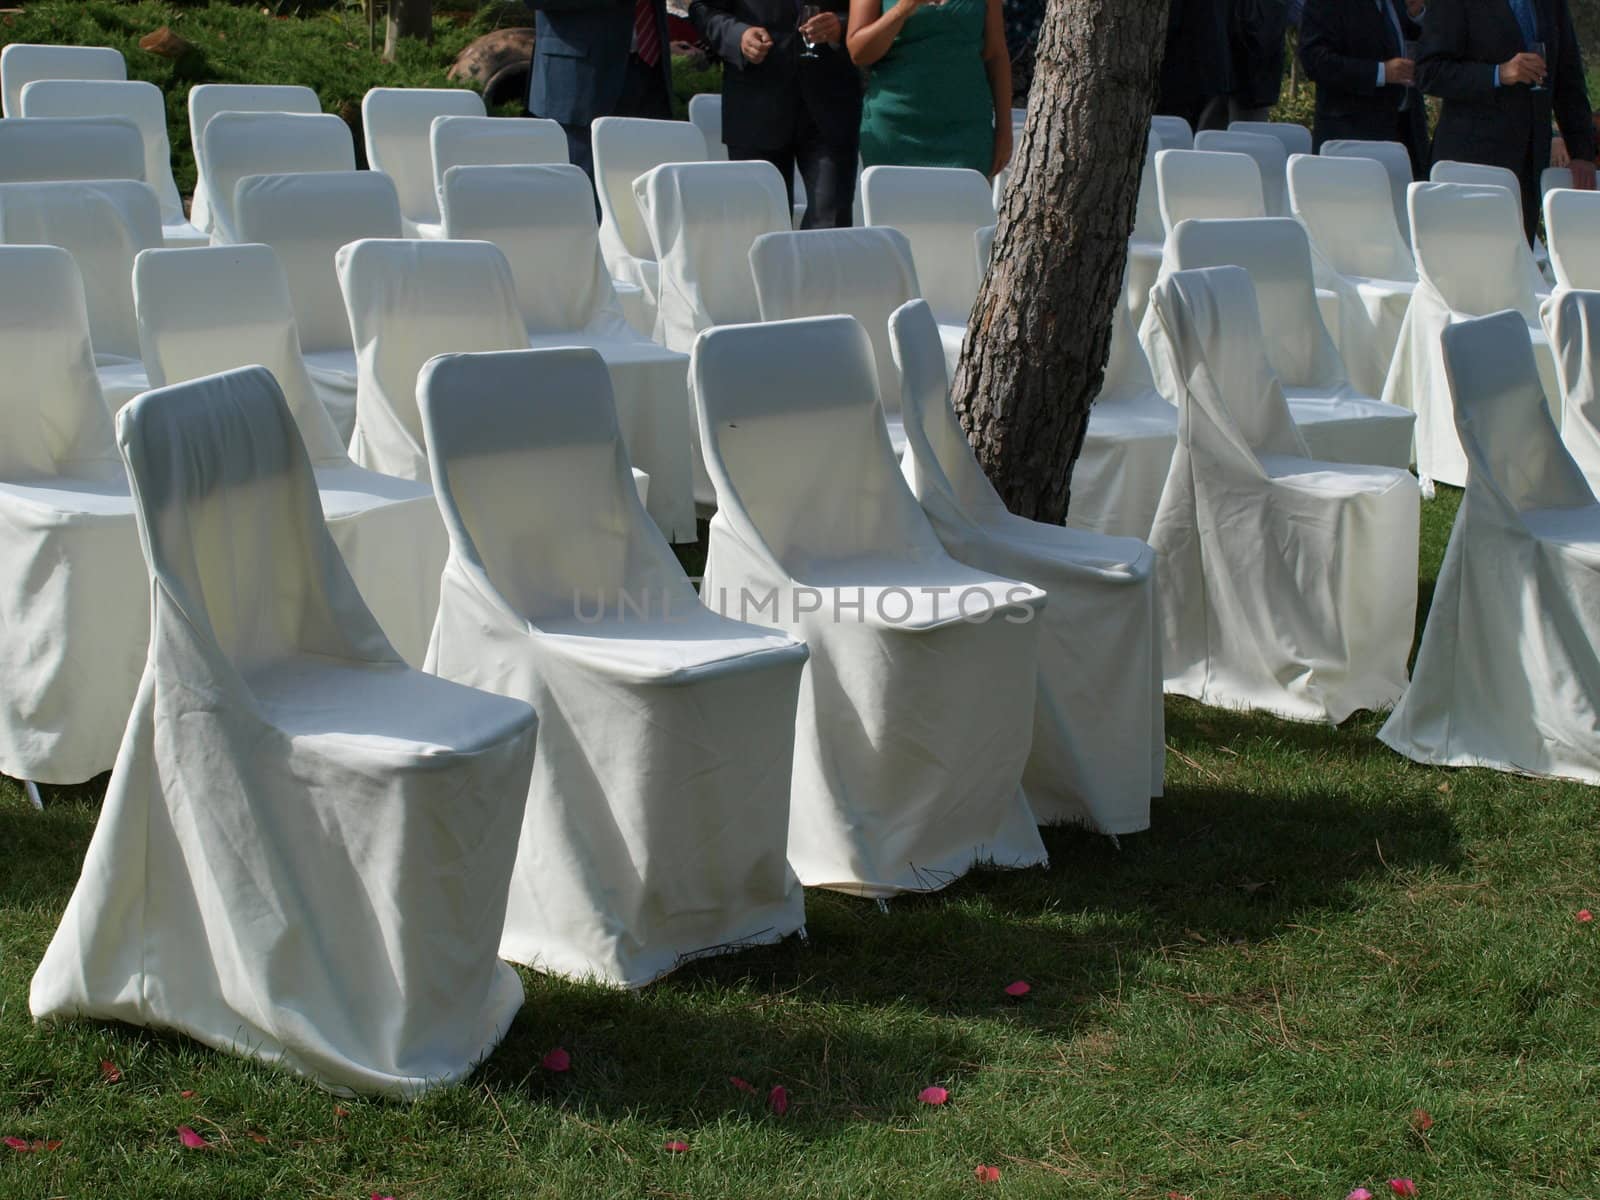 Banquet chairs arranged in rows in a garden wedding